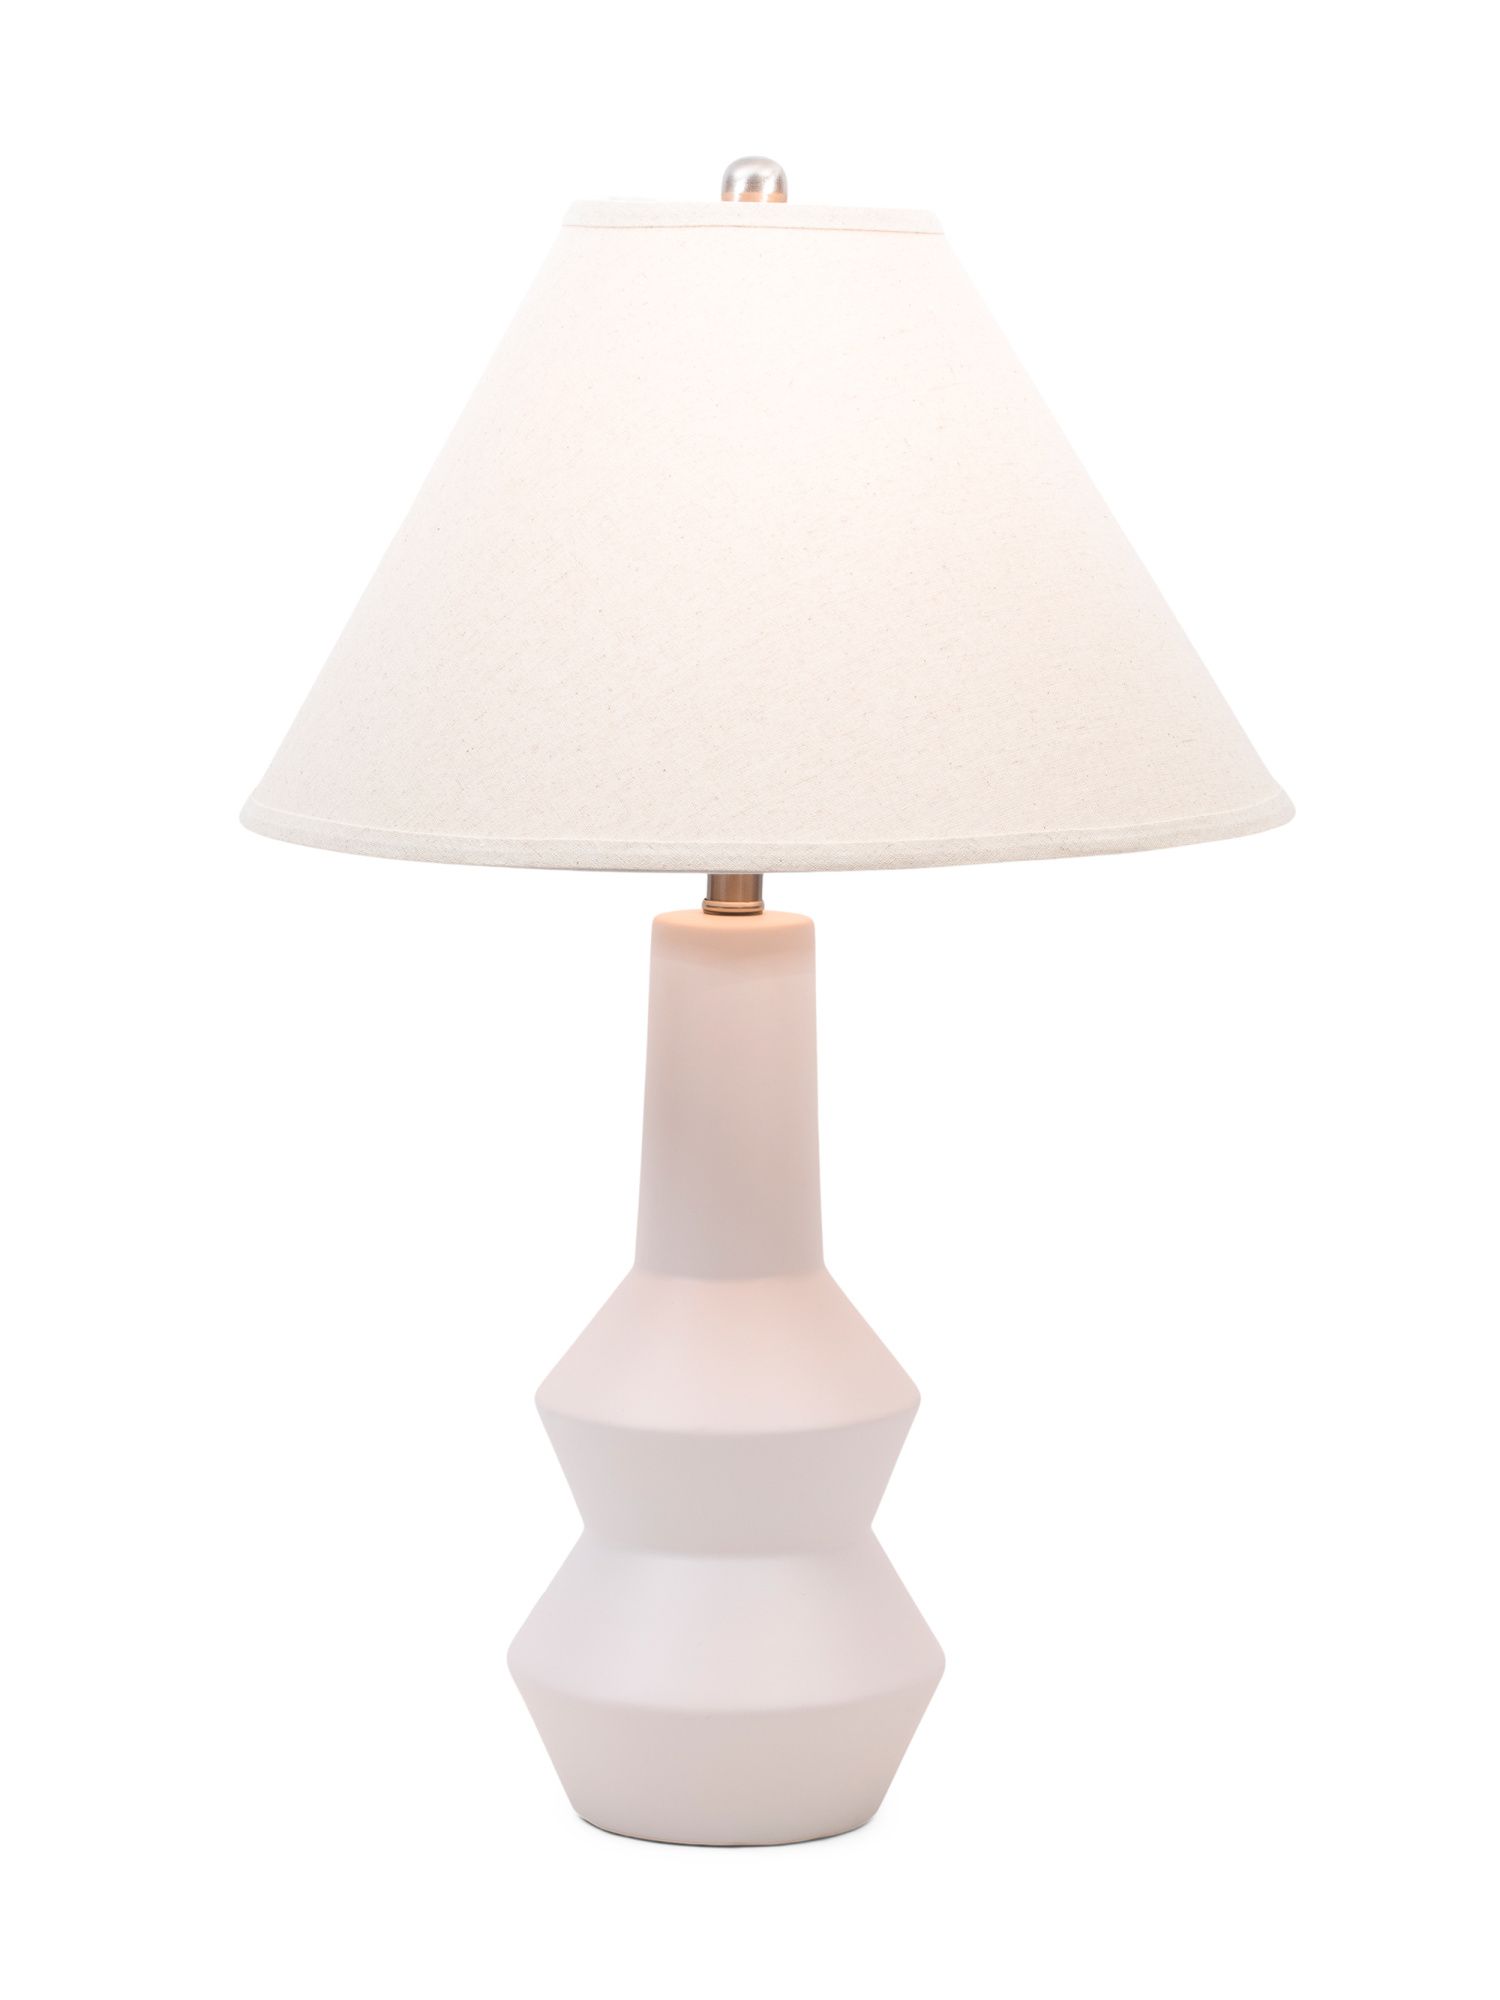 28in Pavillion Table Lamp | TJ Maxx